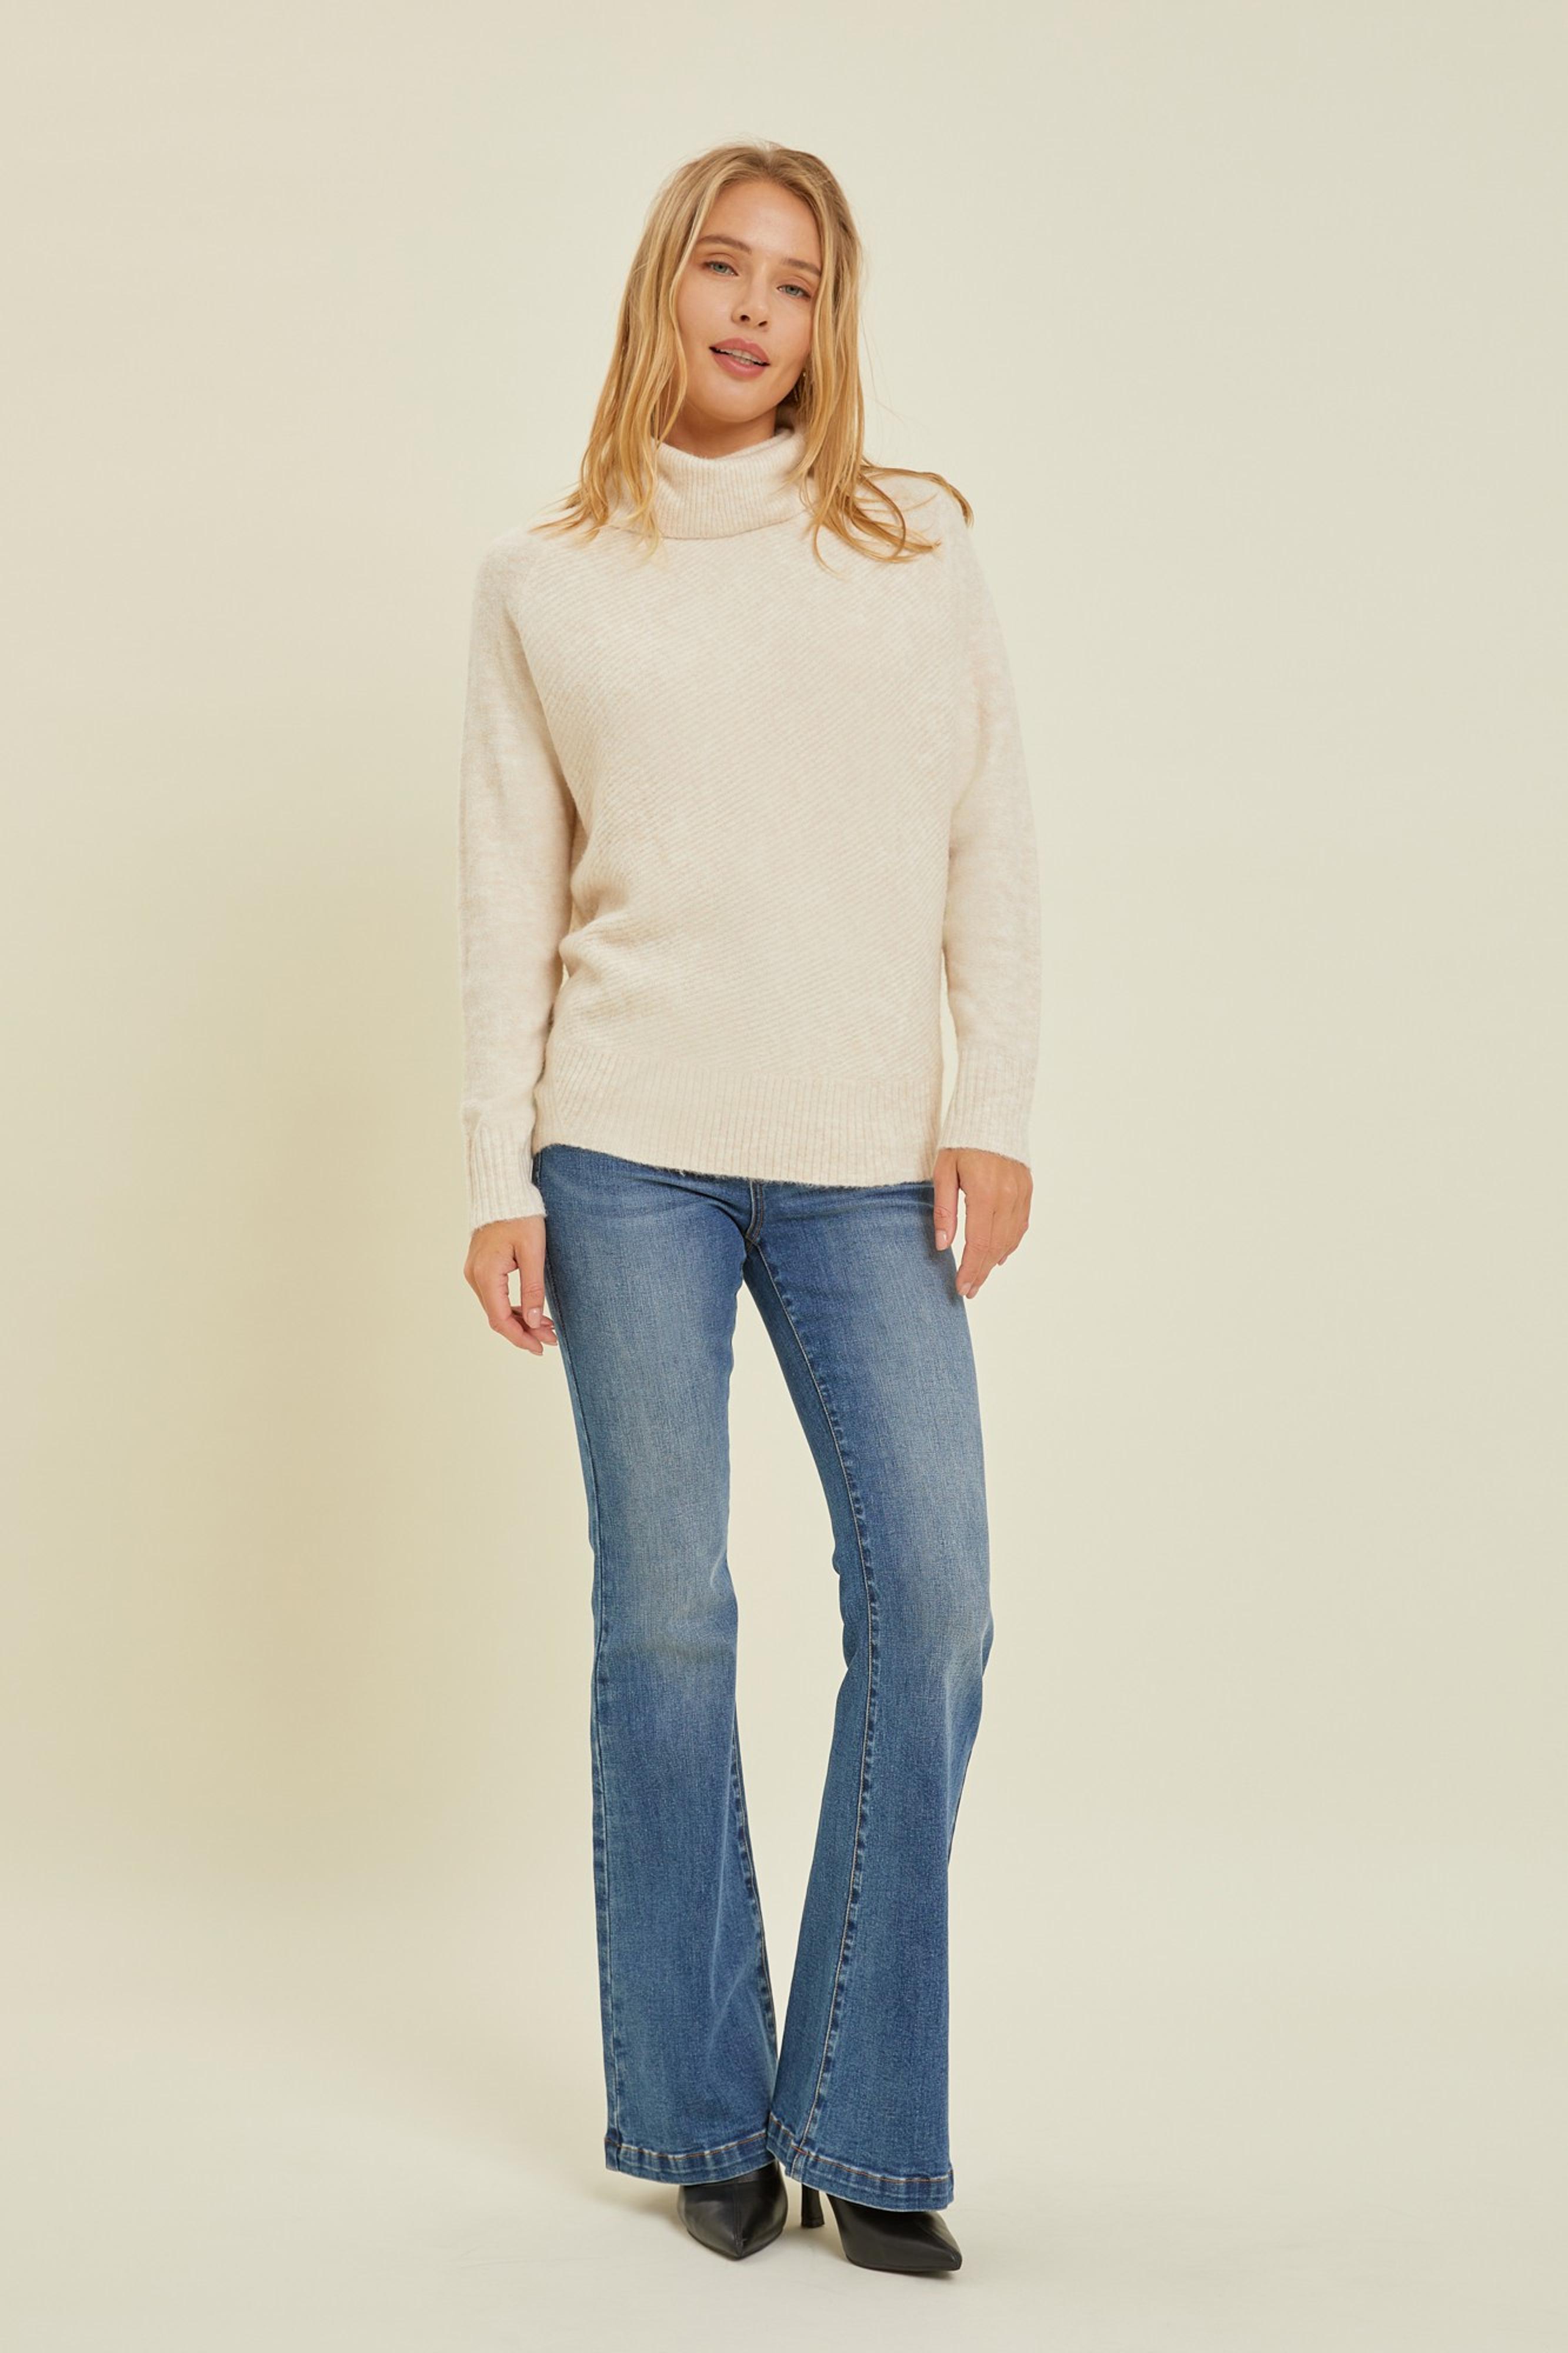  The Kaitlyn Turtleneck Sweater